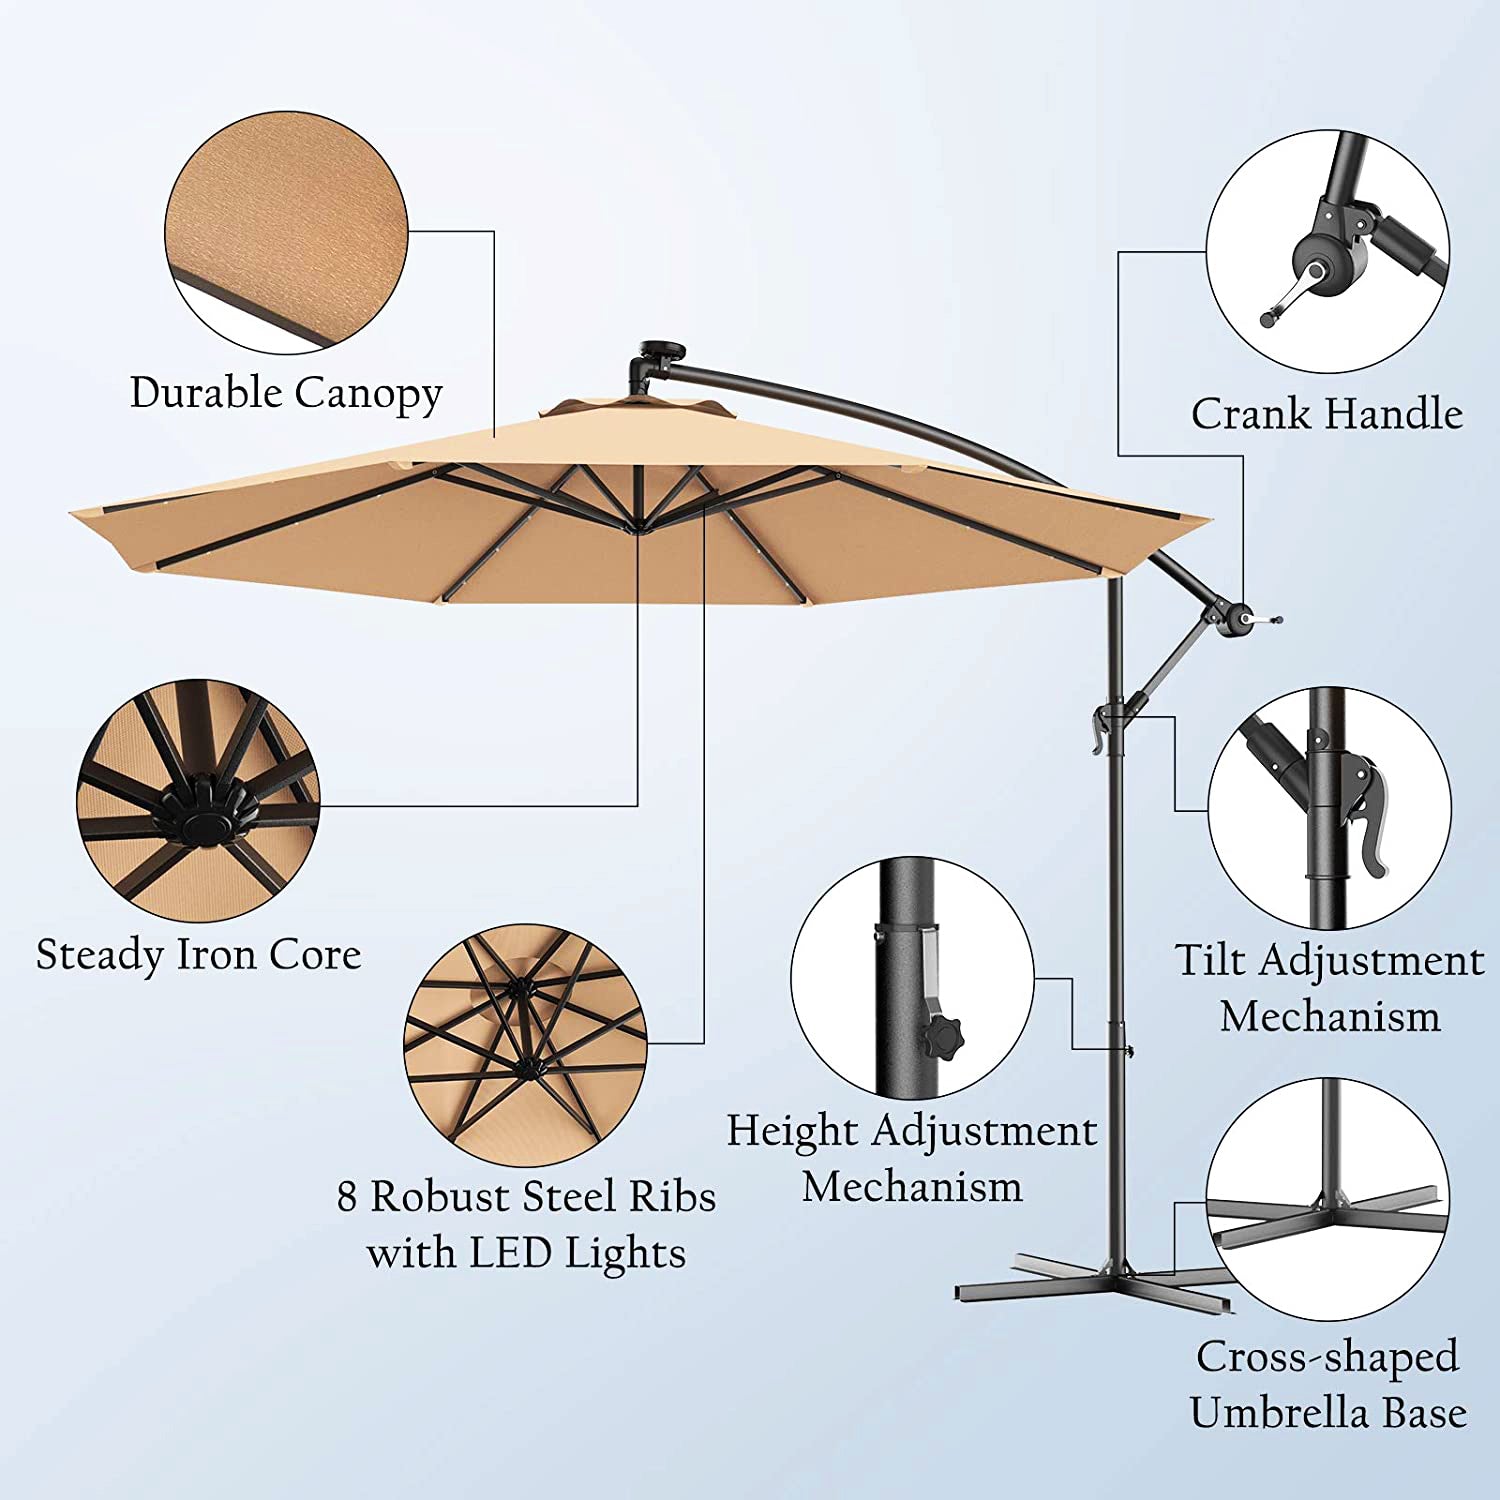 10 ft. Steel Cantilever Solar LED Offset Outdoor Patio Umbrella in Beige